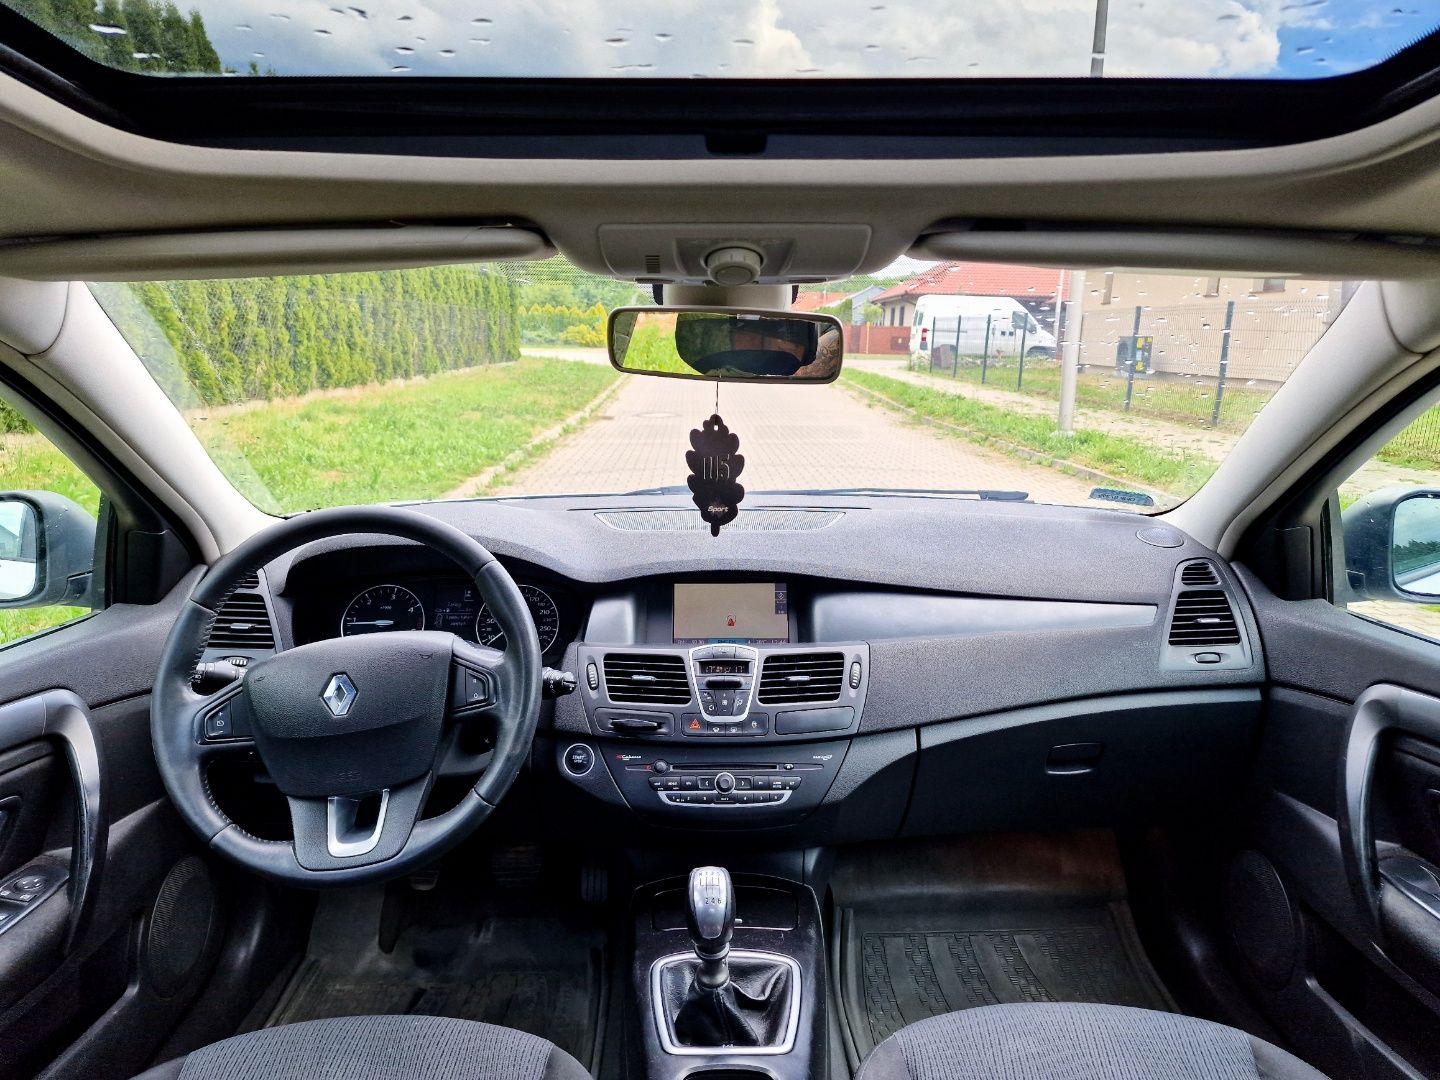 Renault Laguna 2.0dCi 130KM Navi, Panorama Tempomat, Bez Rdzy, ZAMIANA